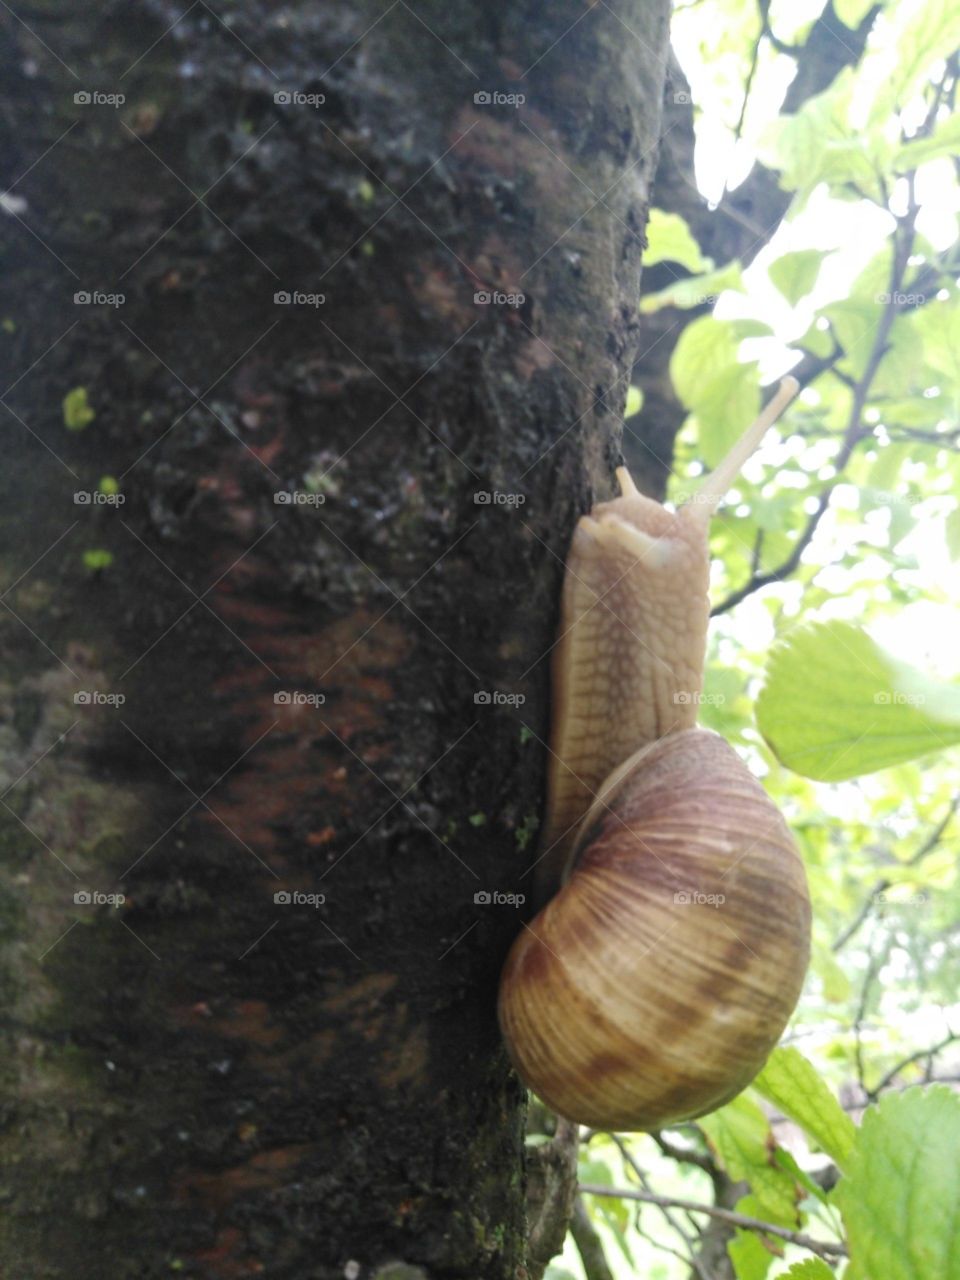 Beautiful snail ^^